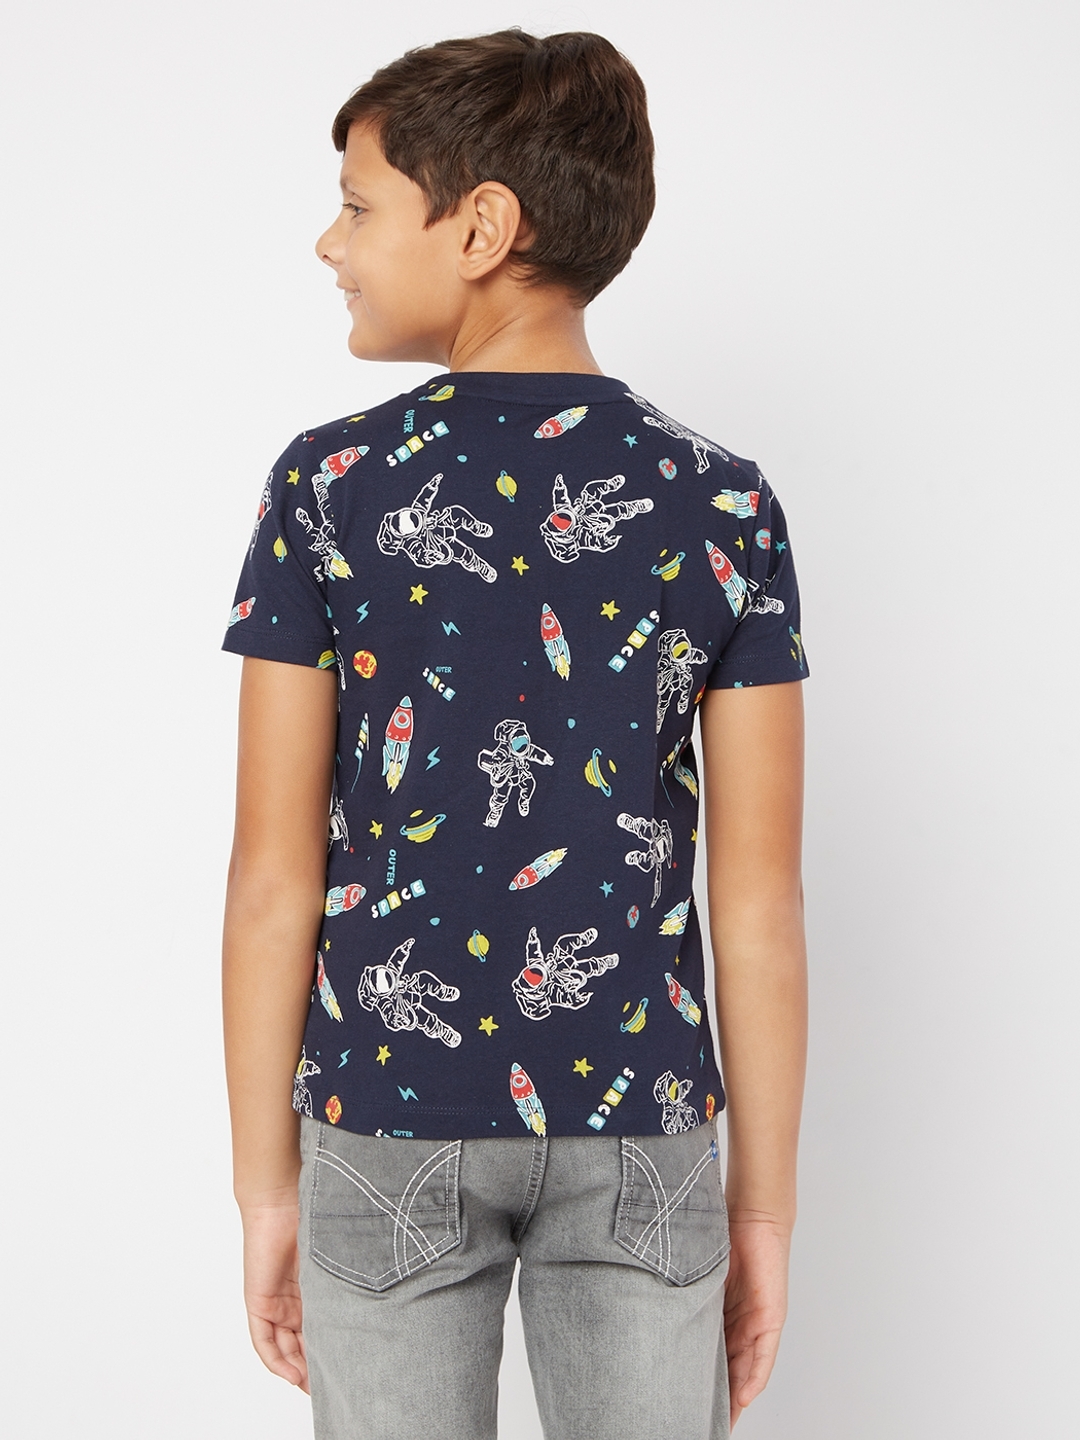 Scuba Space Slim Fit Round-Neck T-Shirt